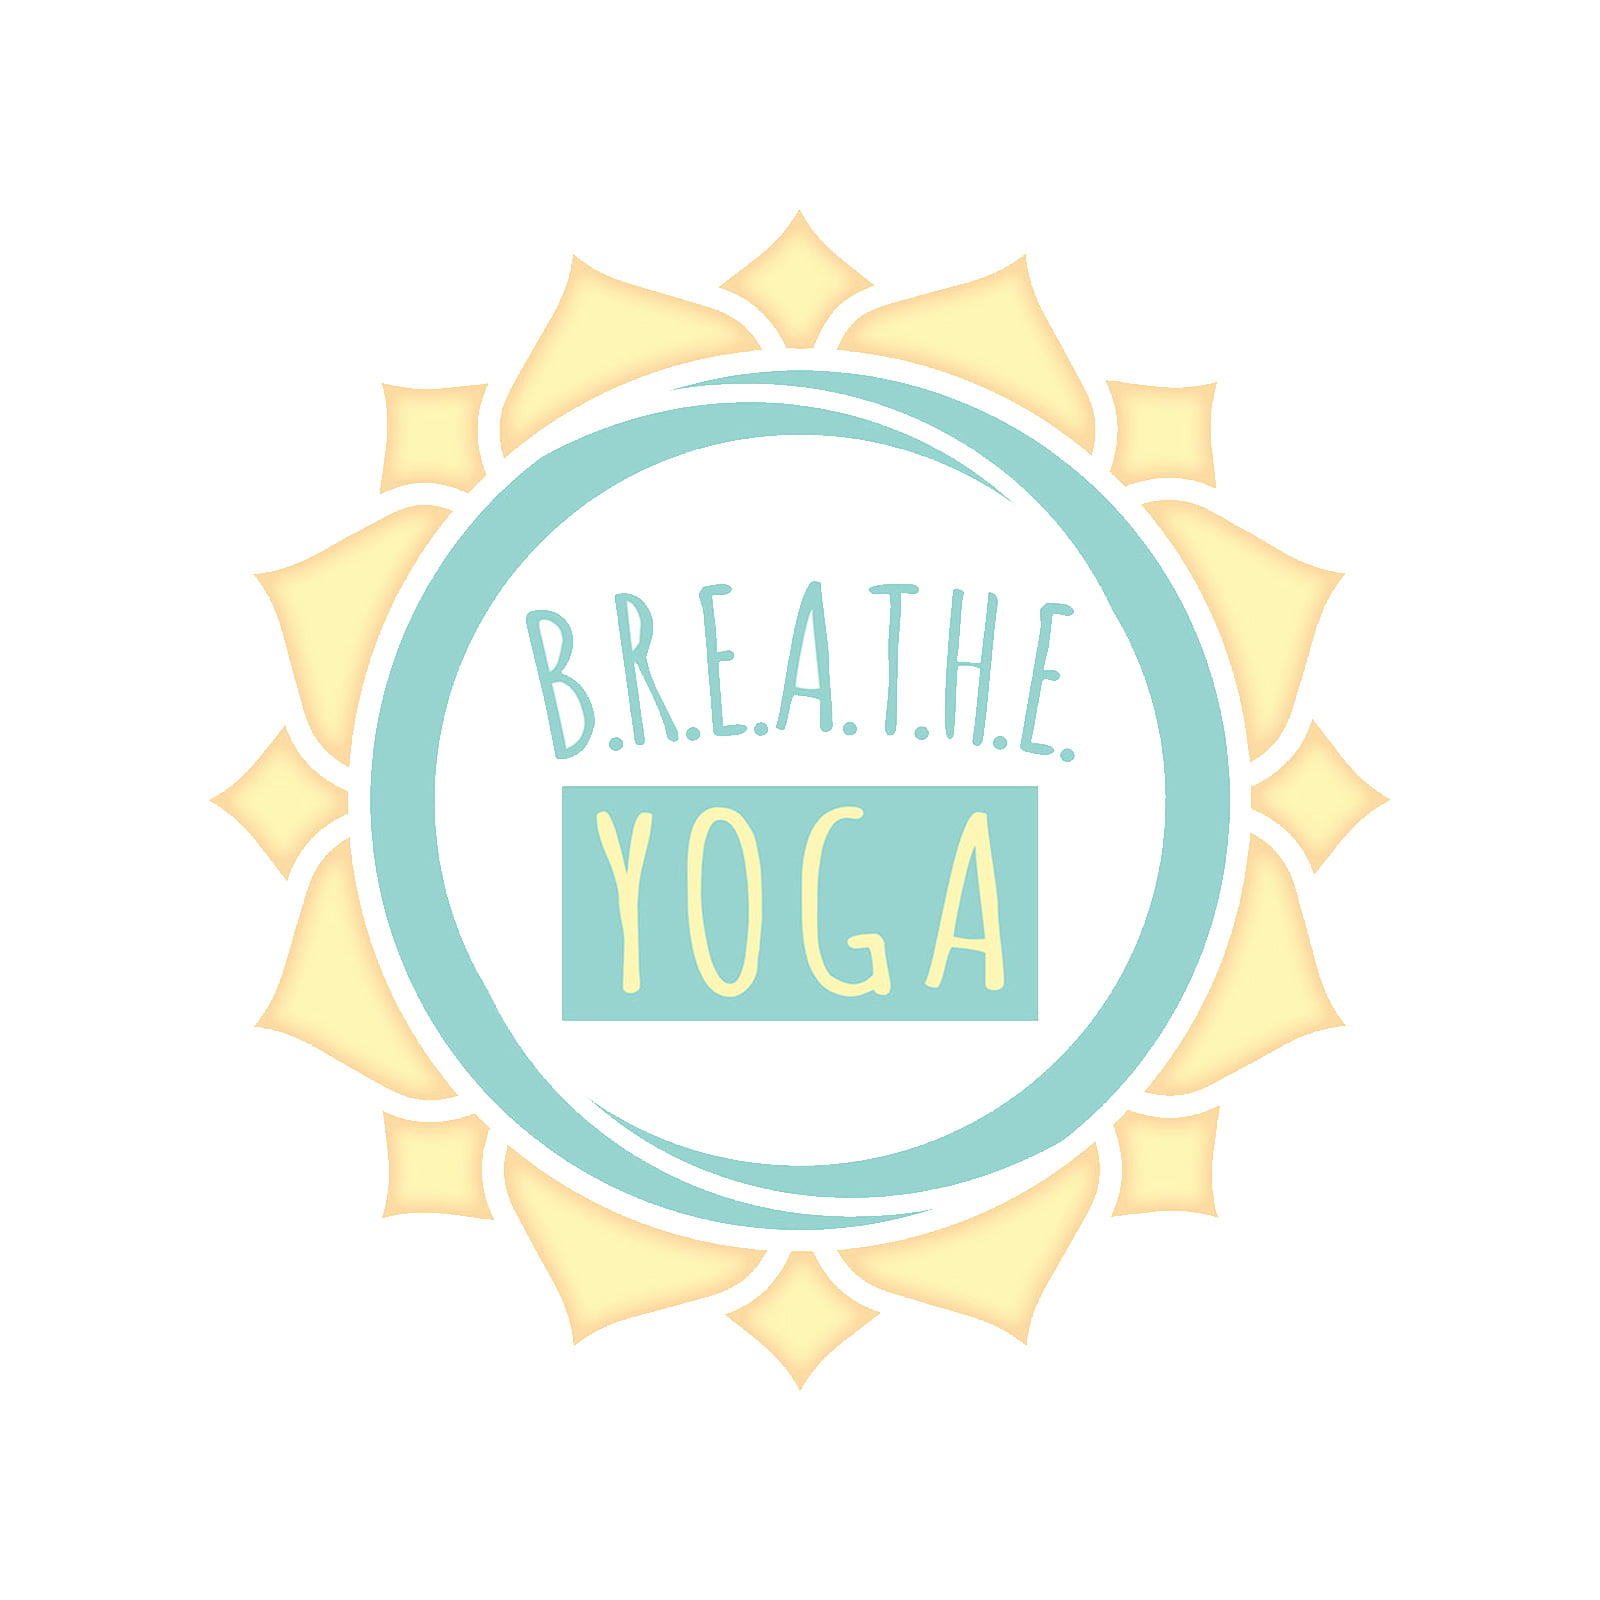 B.R.E.A.T.H.E. Yoga Logo